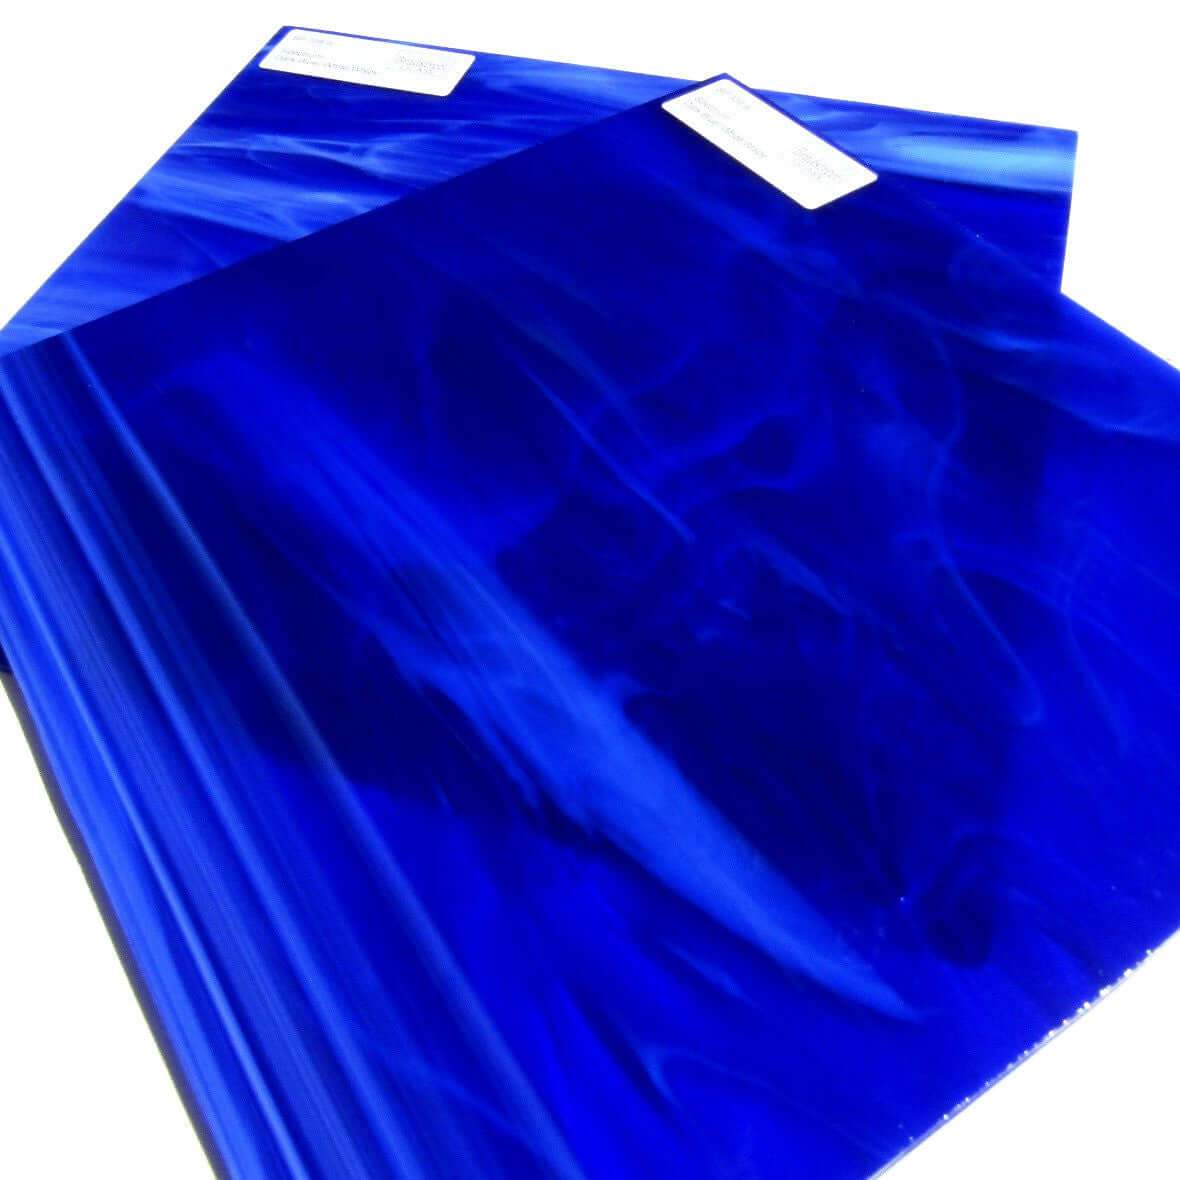 Spectrum SP 339.6 Dark Blue and White Wispy Stained Glass Sheet Opaque Streaky Swirled